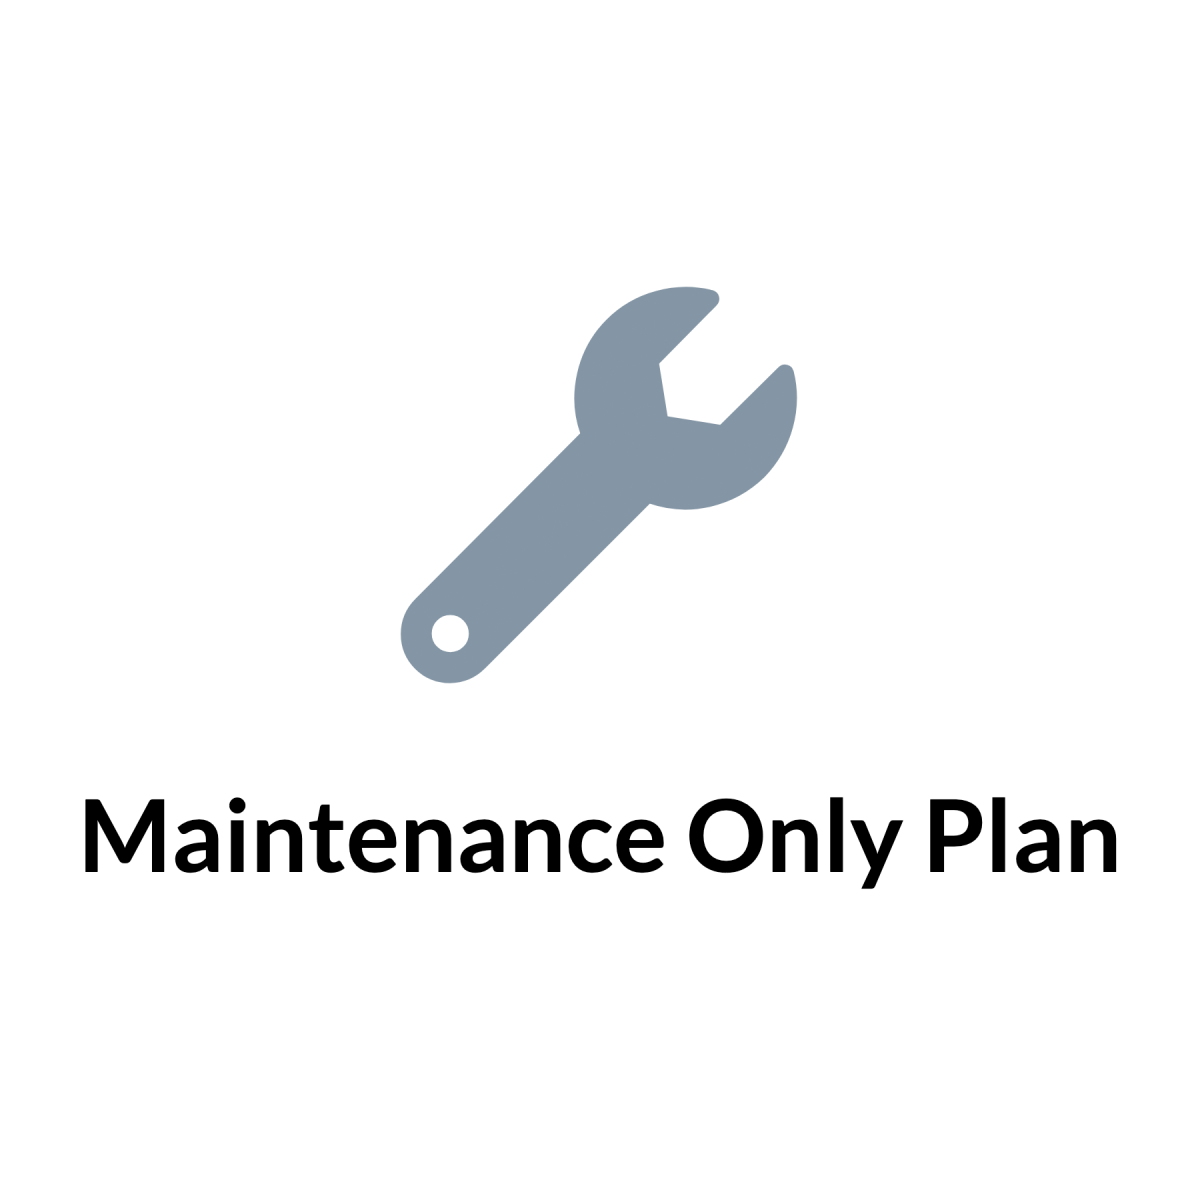 Maintenance Only Plan